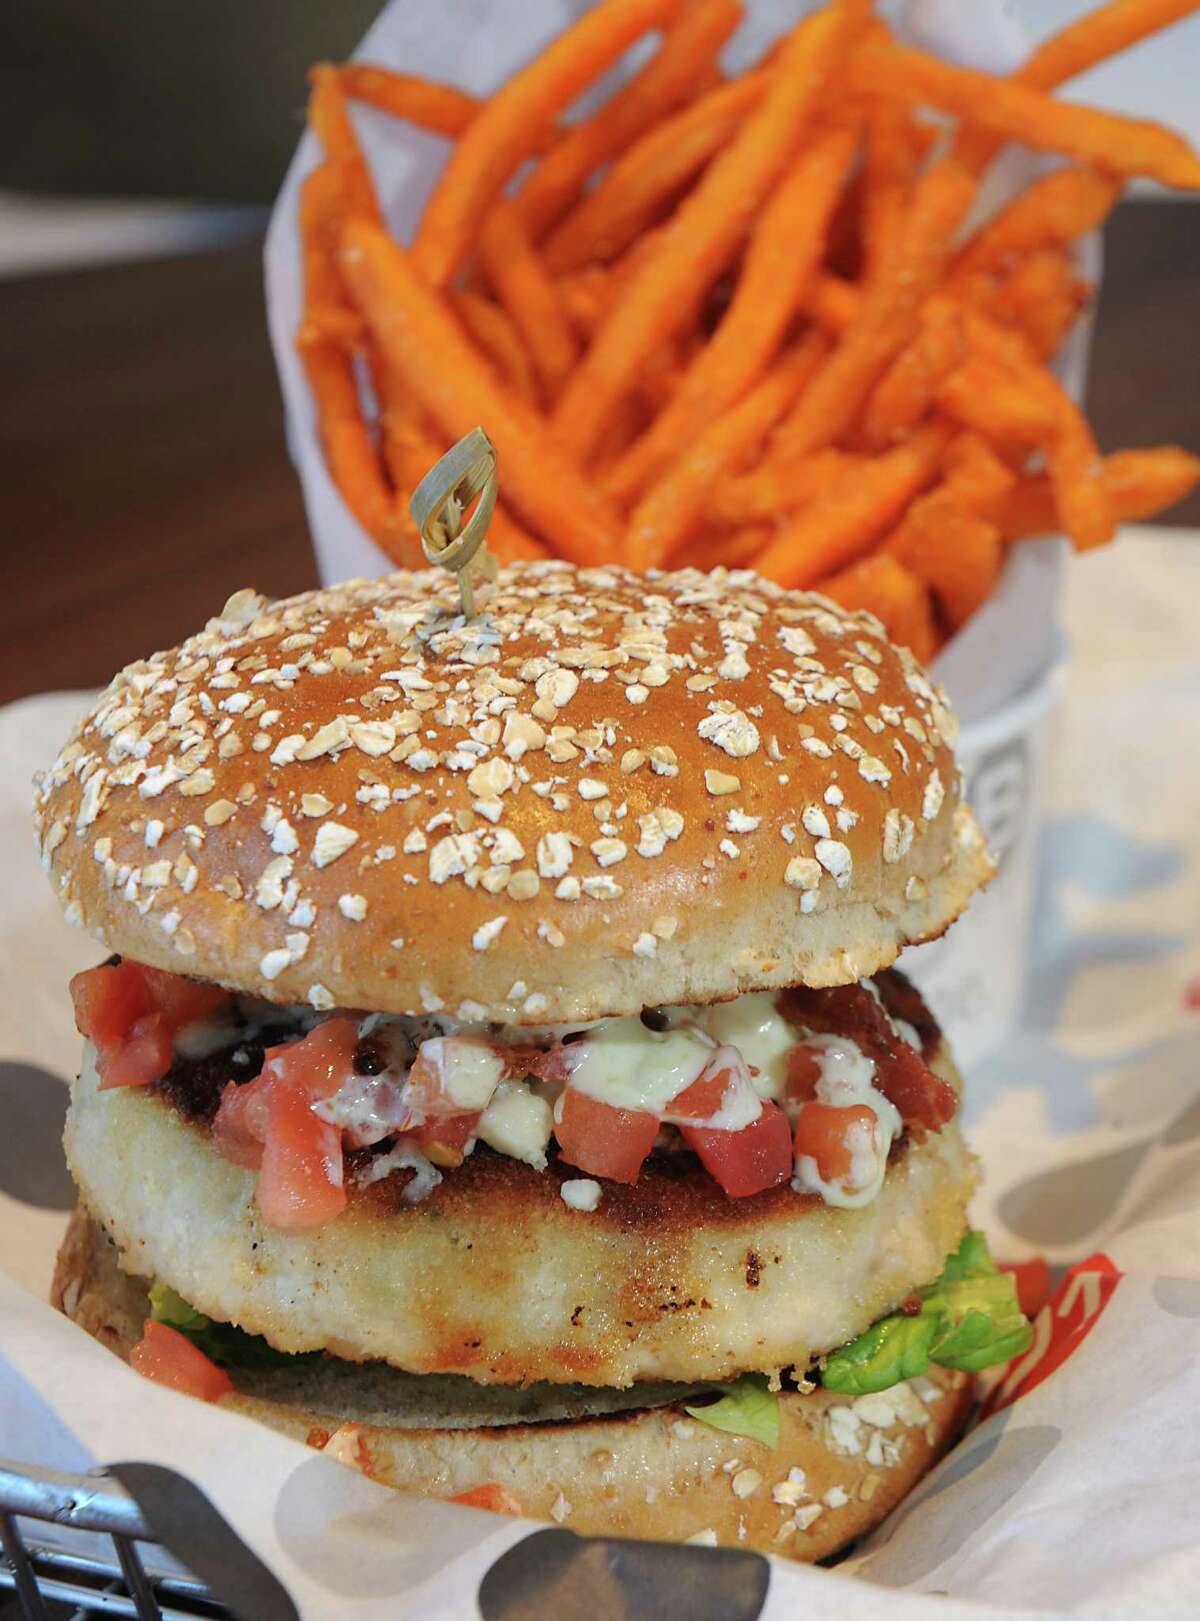 The cobb turkey burger with sweet potato fries at Burger 21 on Tuesday, Feb. 10, 2015 in Latham, N.Y. (Lori Van Buren / Times Union)